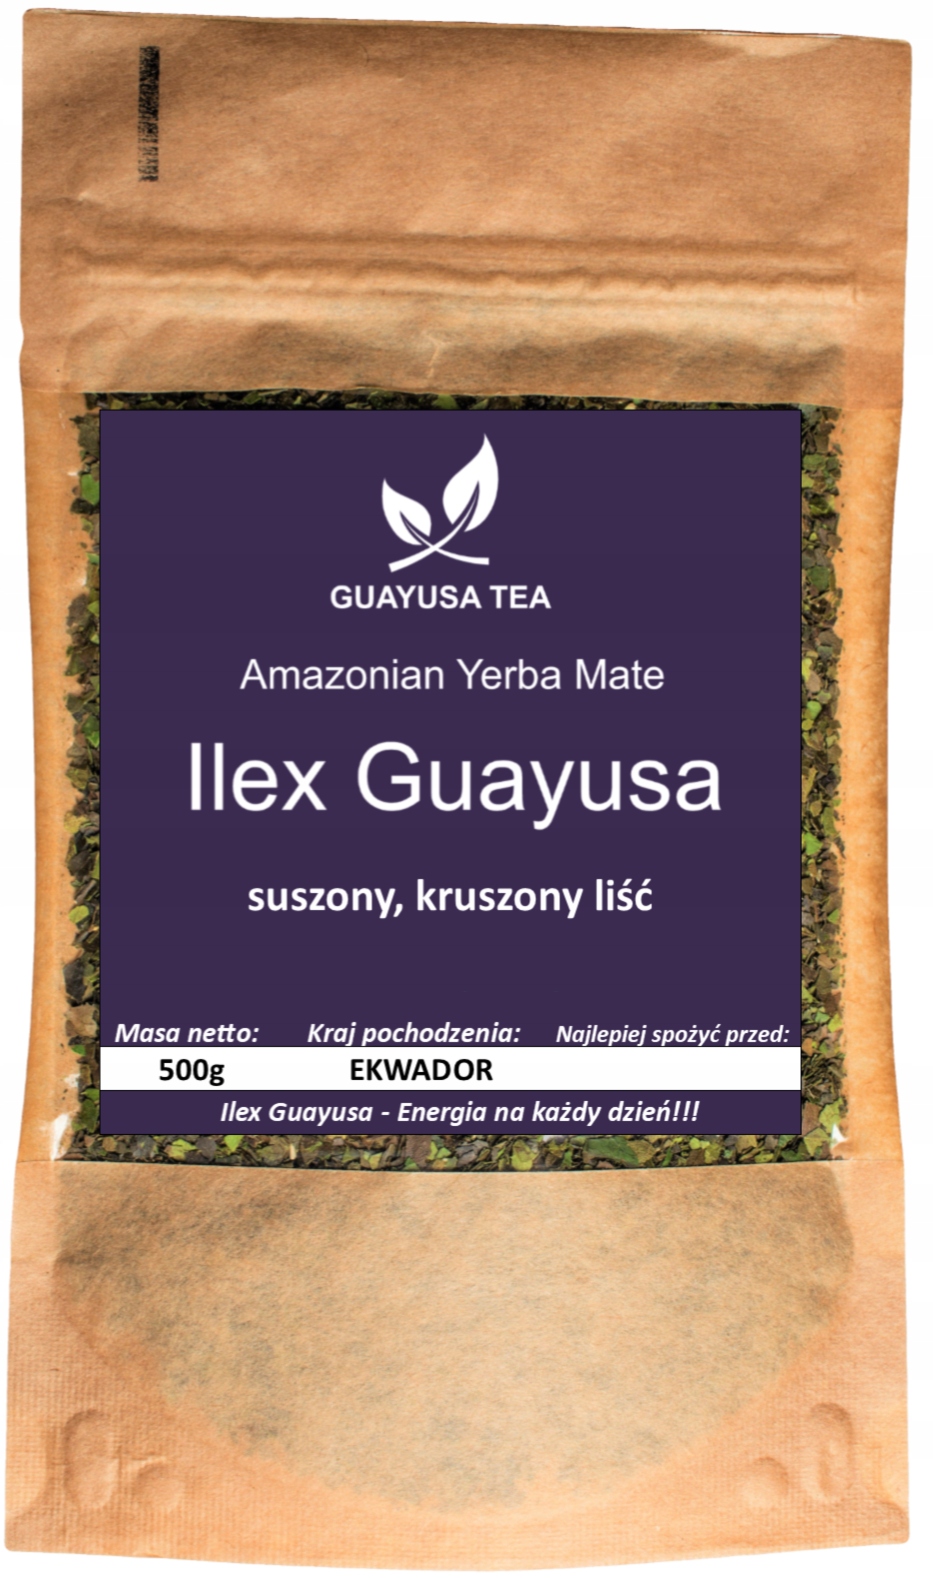 Ilex Guayusa 500g, Energia, Relax, Pobudzenie Marka Guayusa Tea